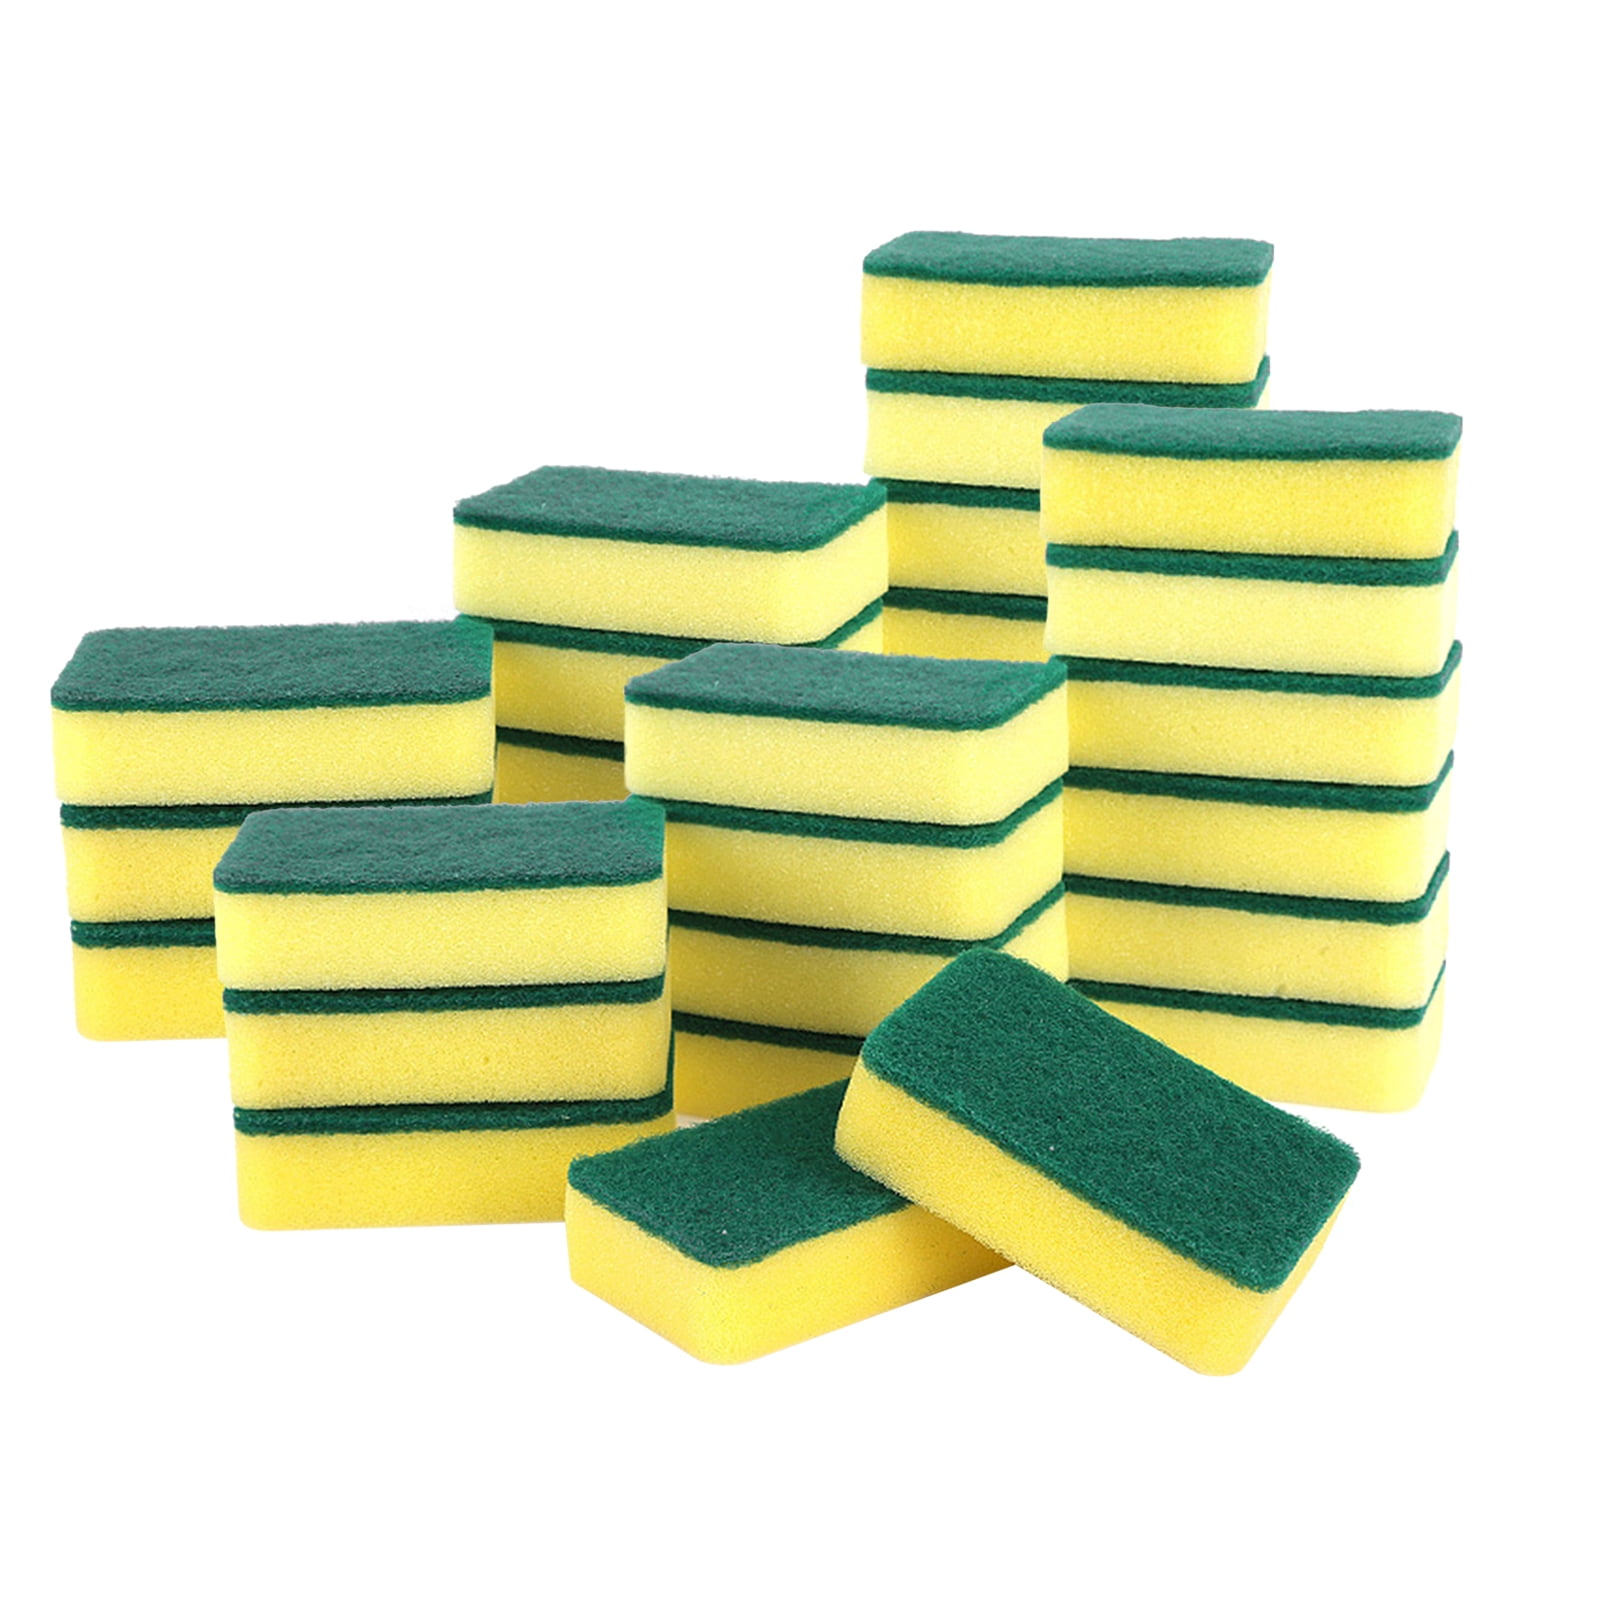 Standard Sponge BULK 5 Boxes (480 Sponges @ $1.55 ea)